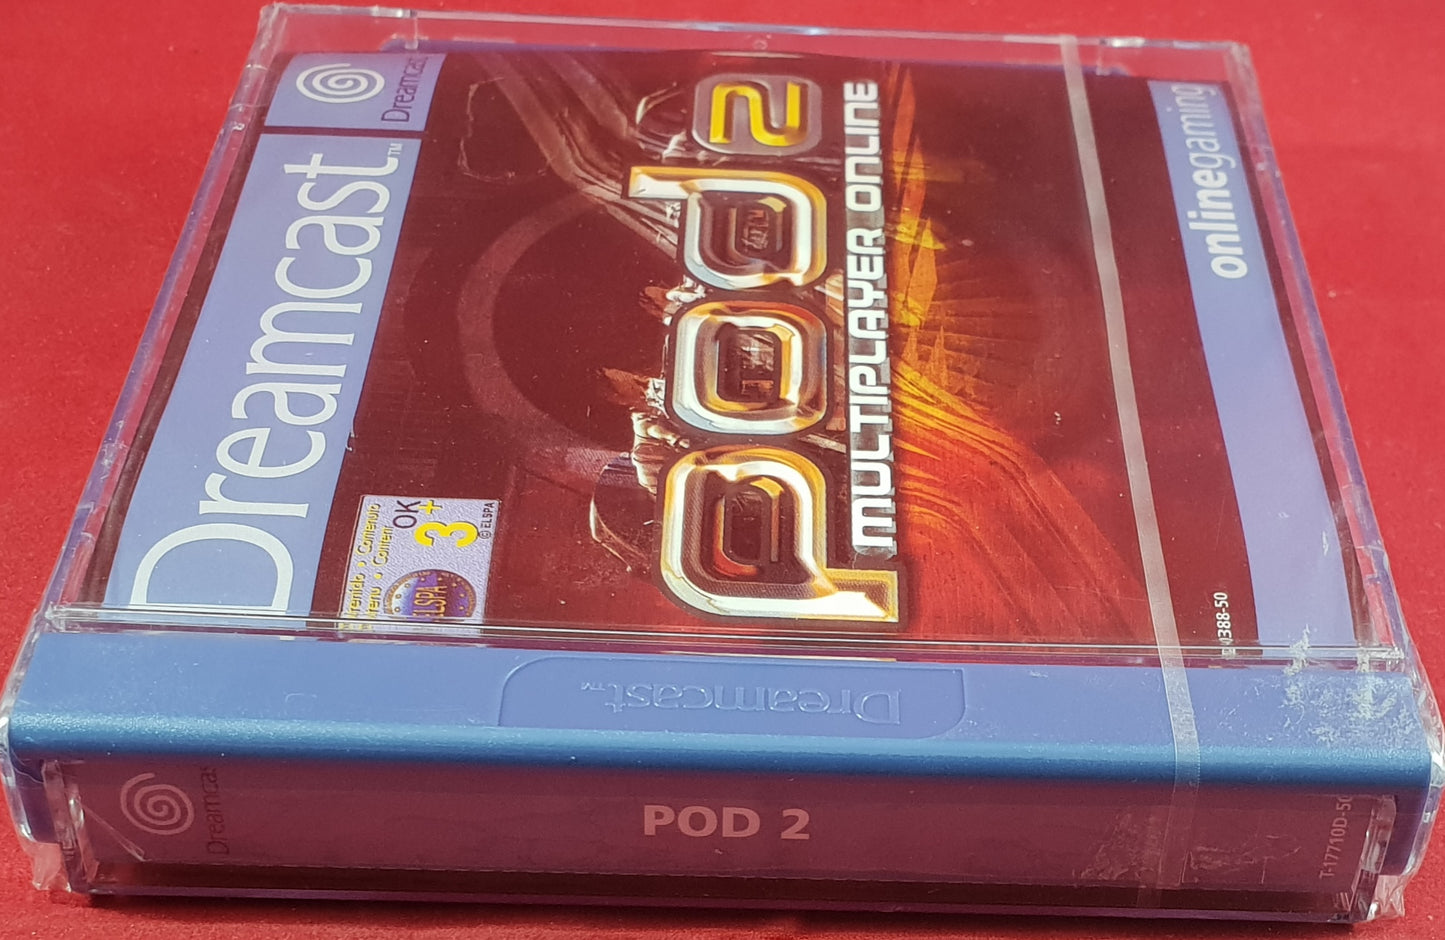 Brand New and Sealed Pod 2 Sega Dreamcast Game